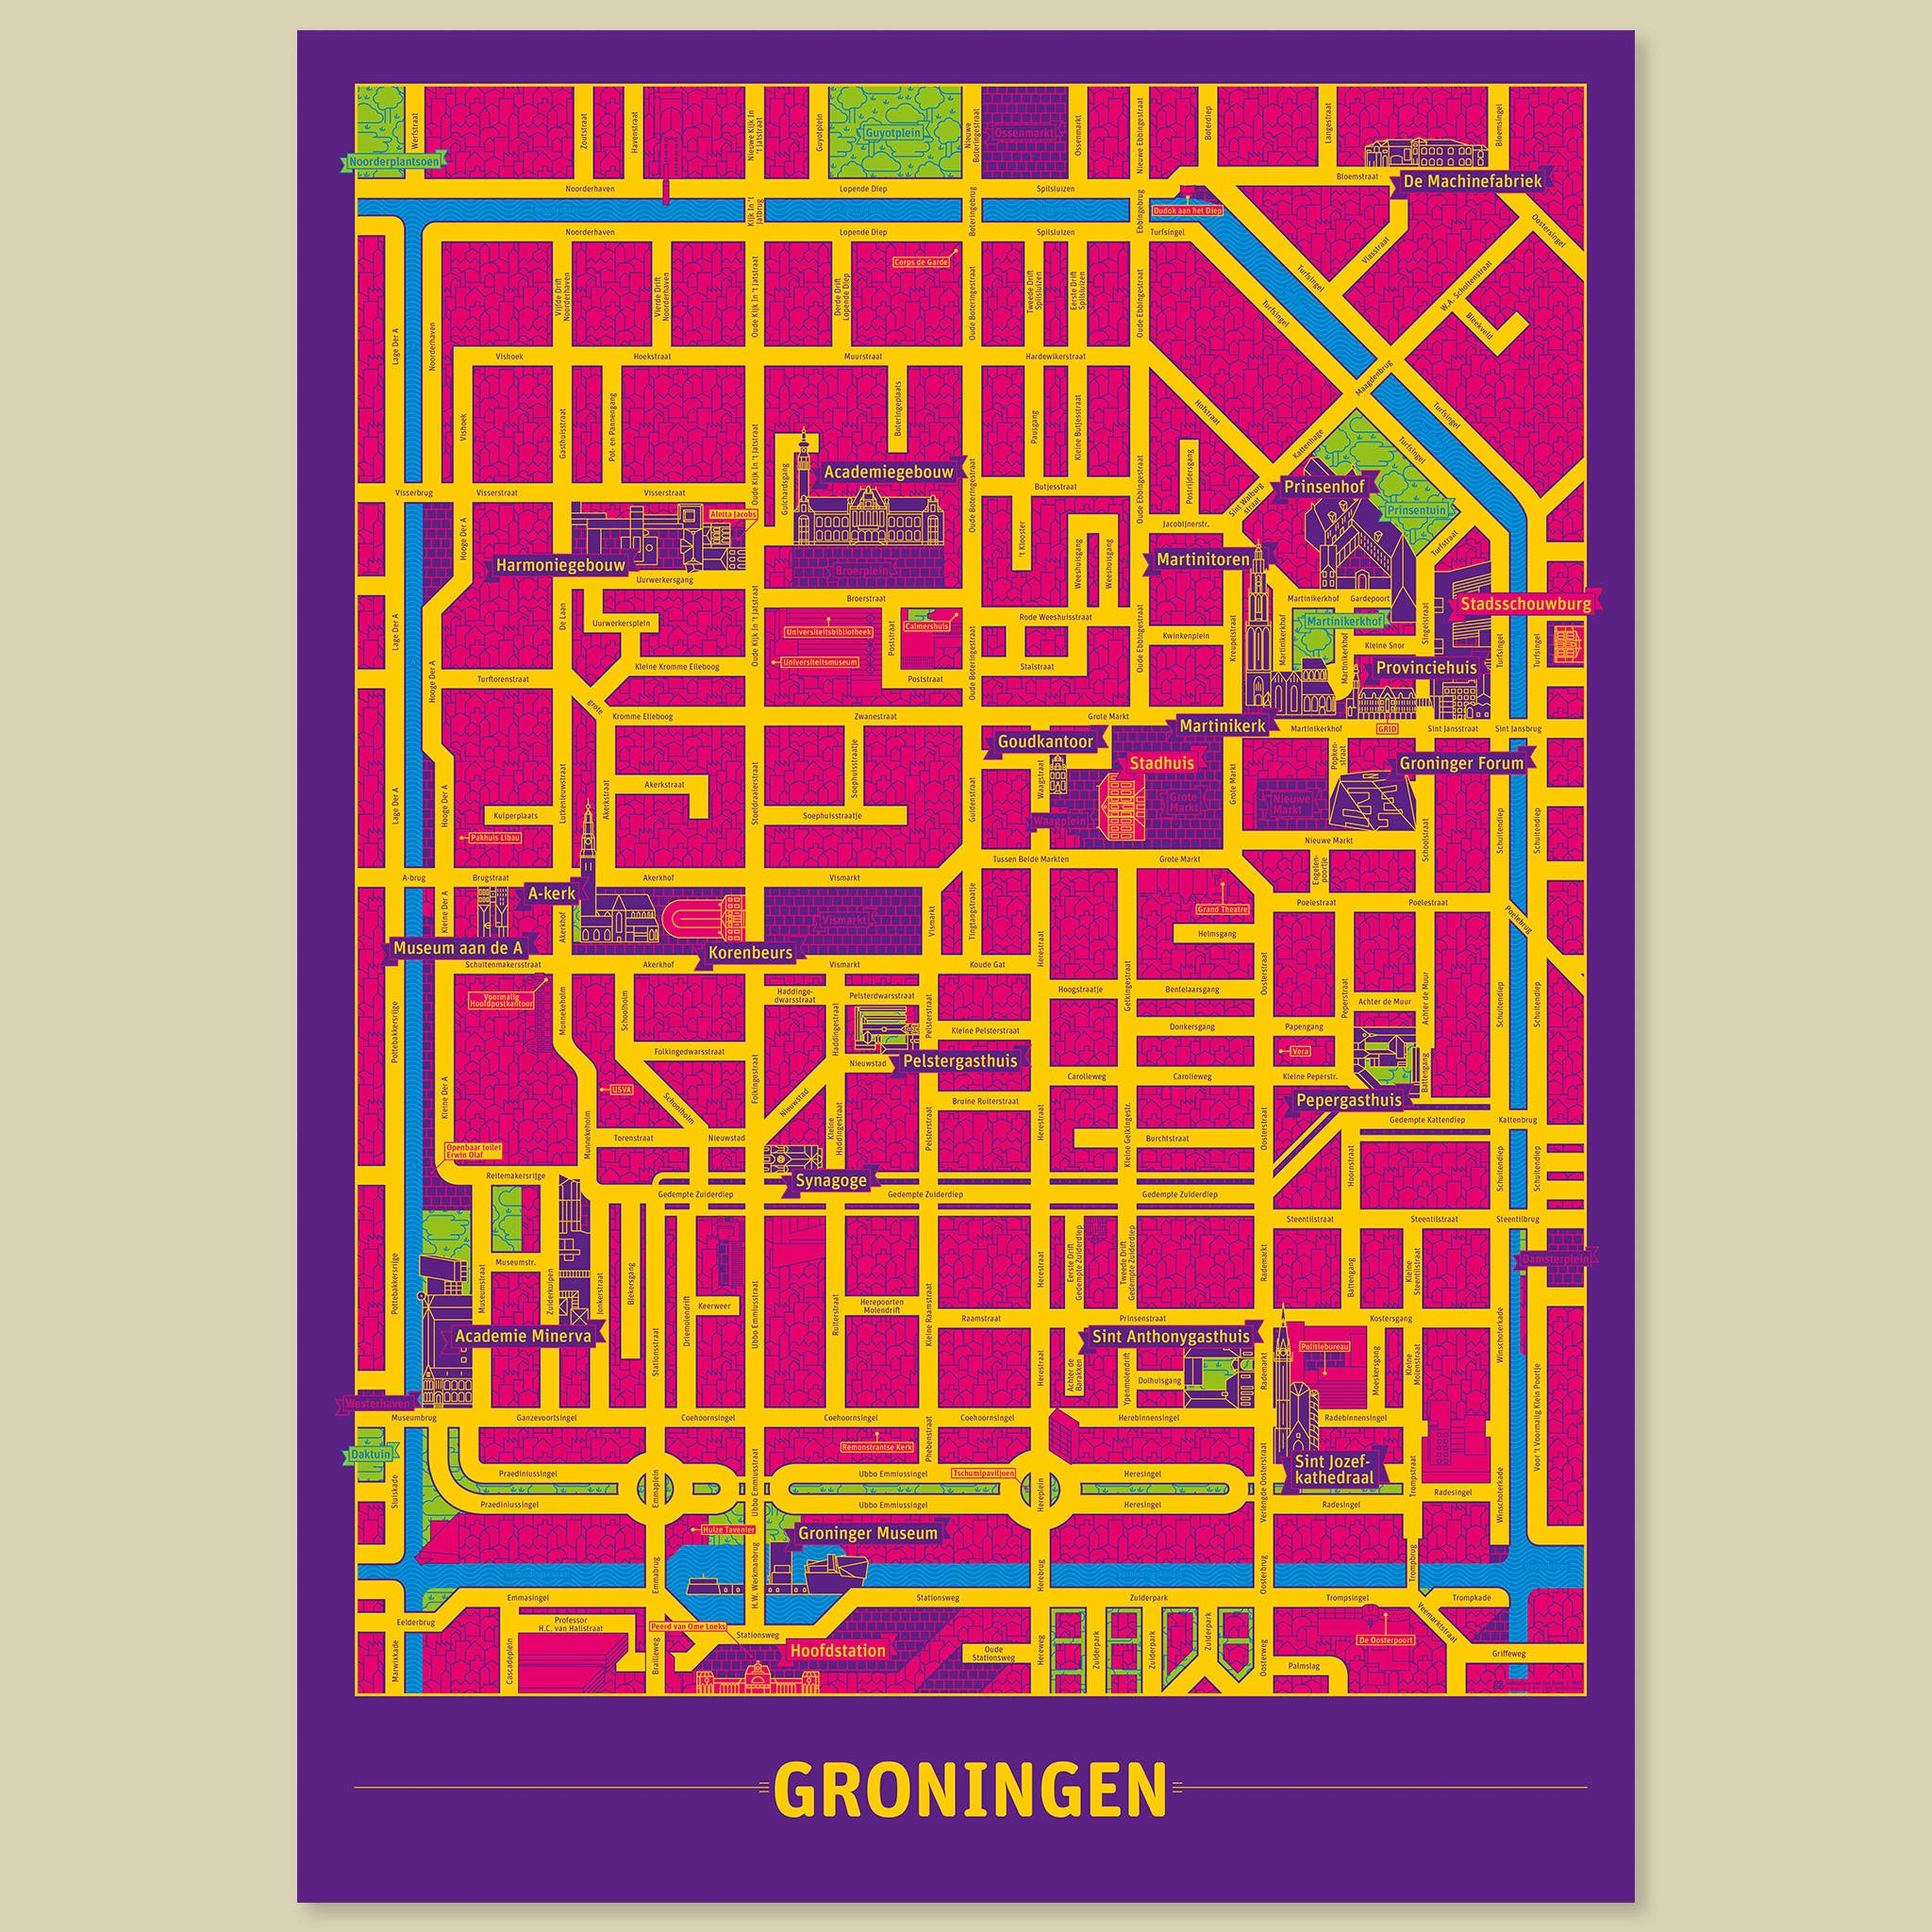 Grid Groningen